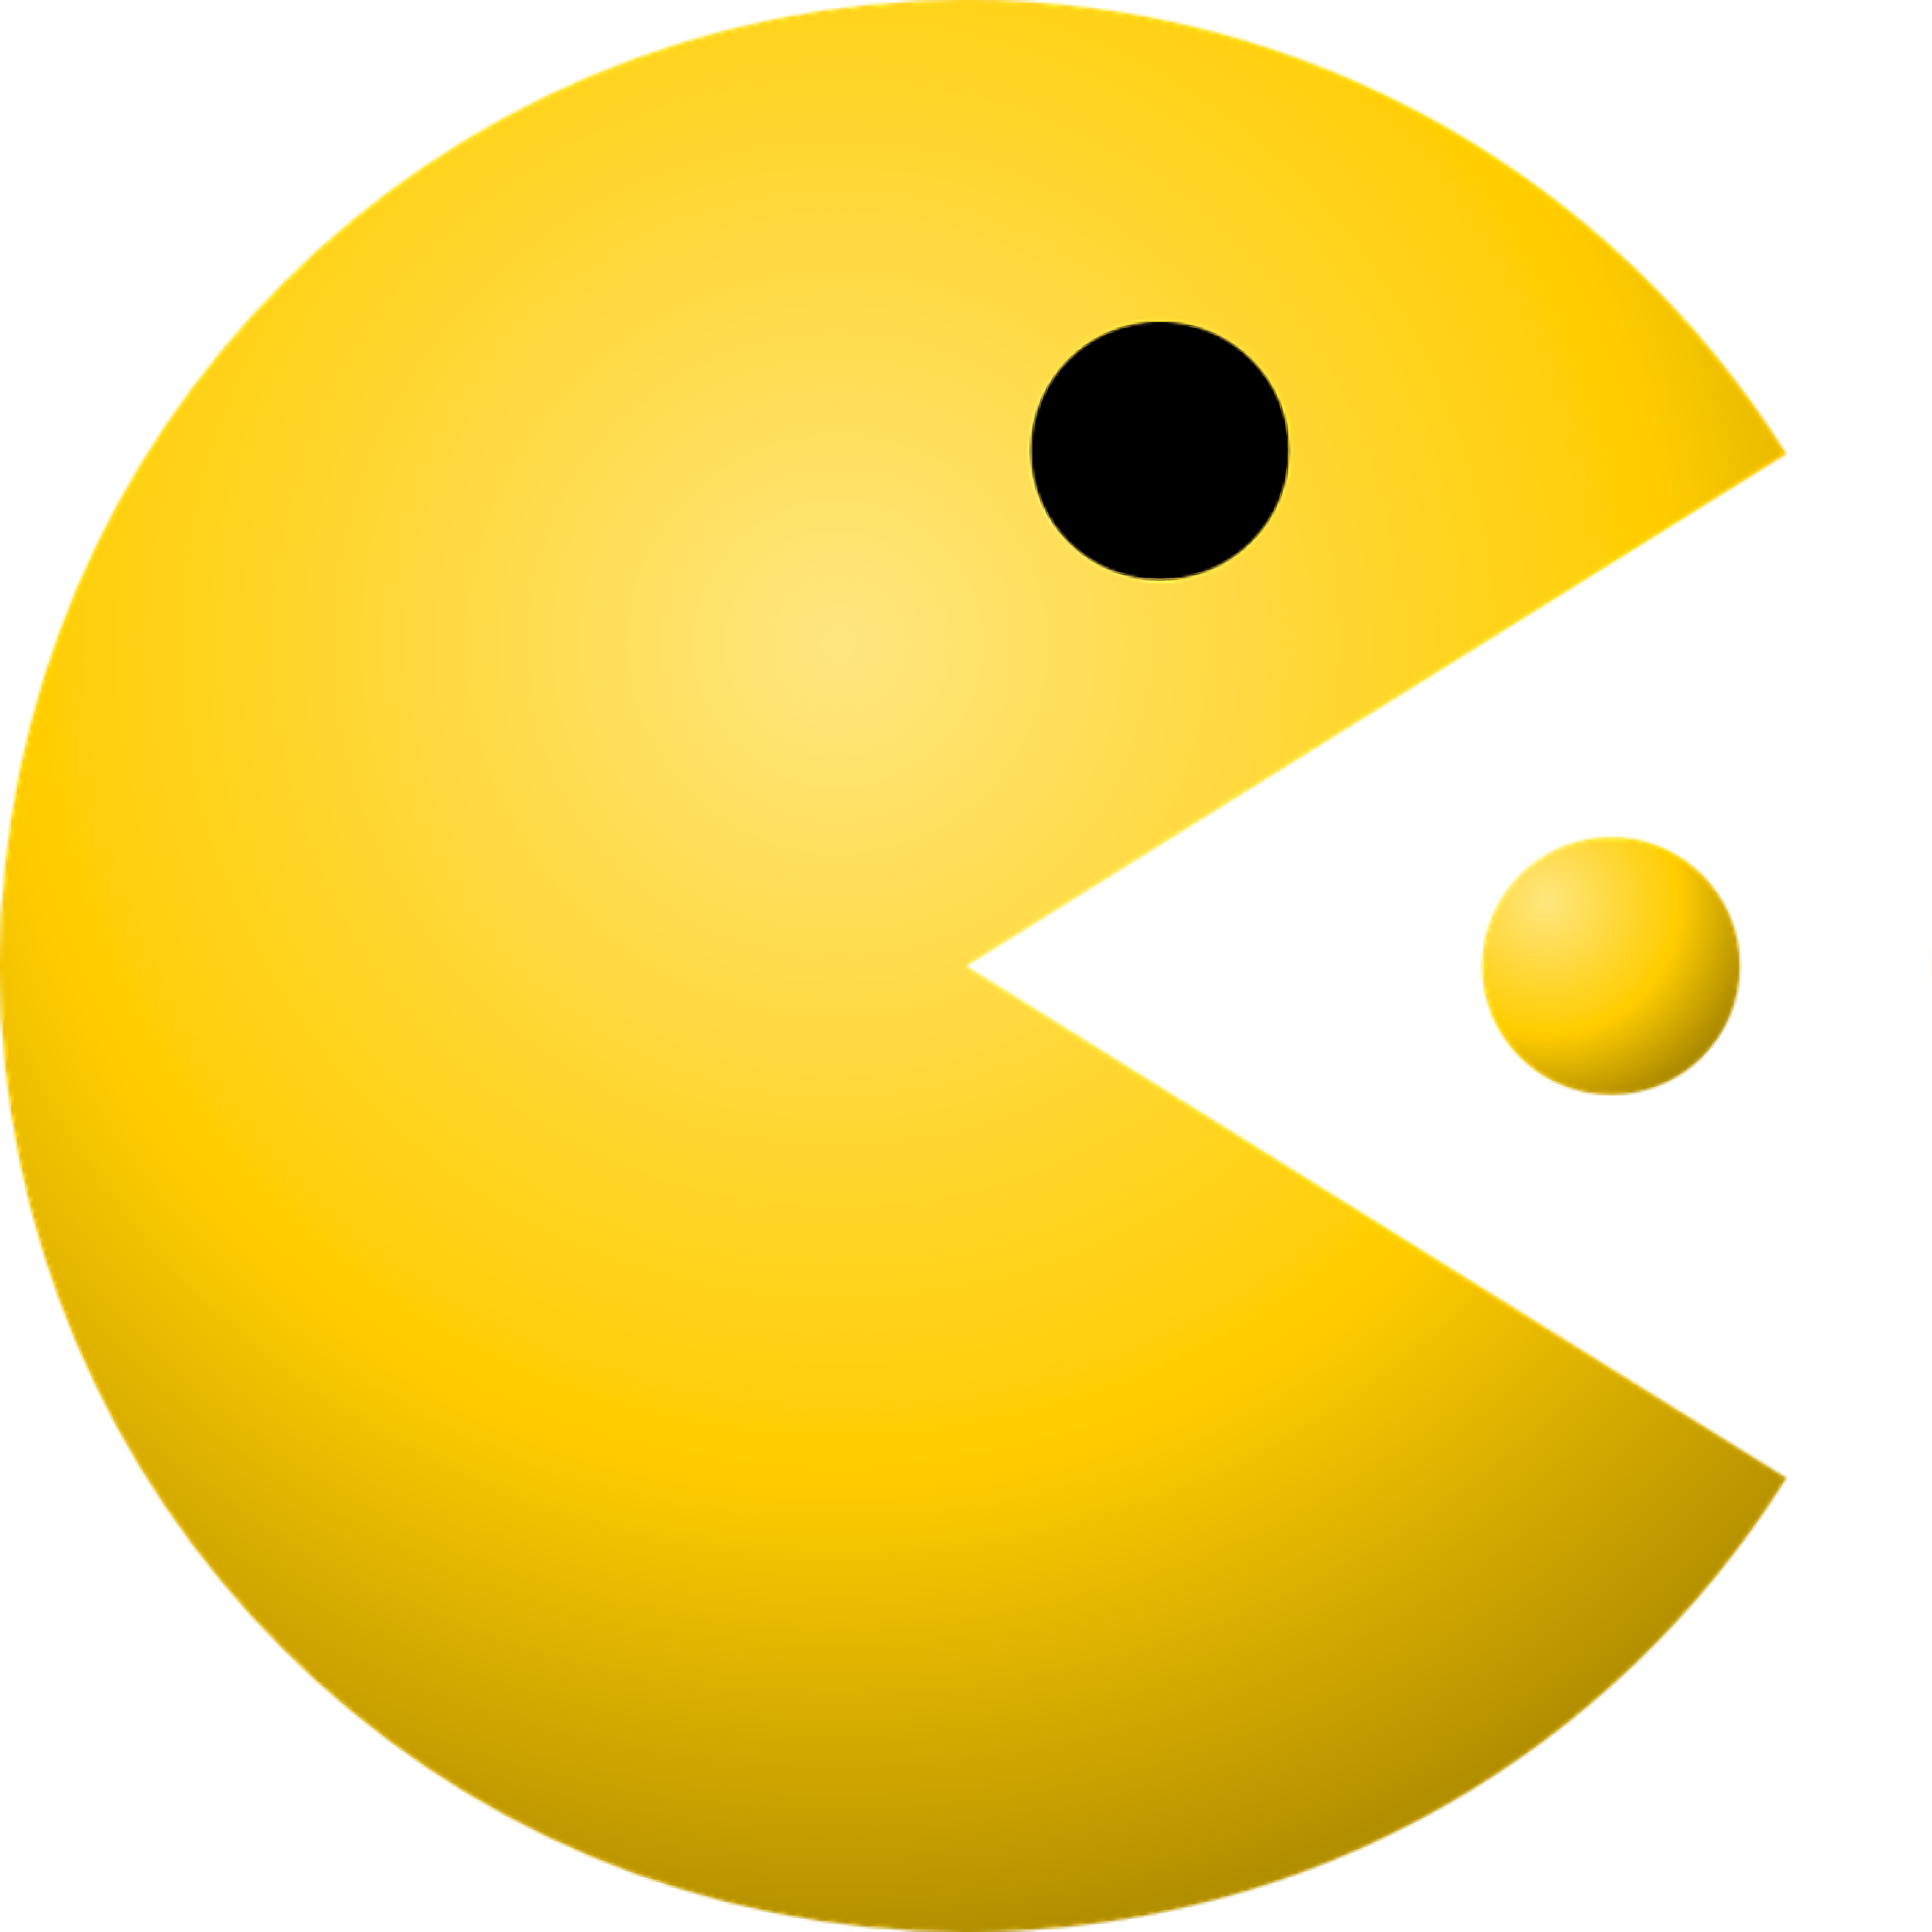 Gry Pacman